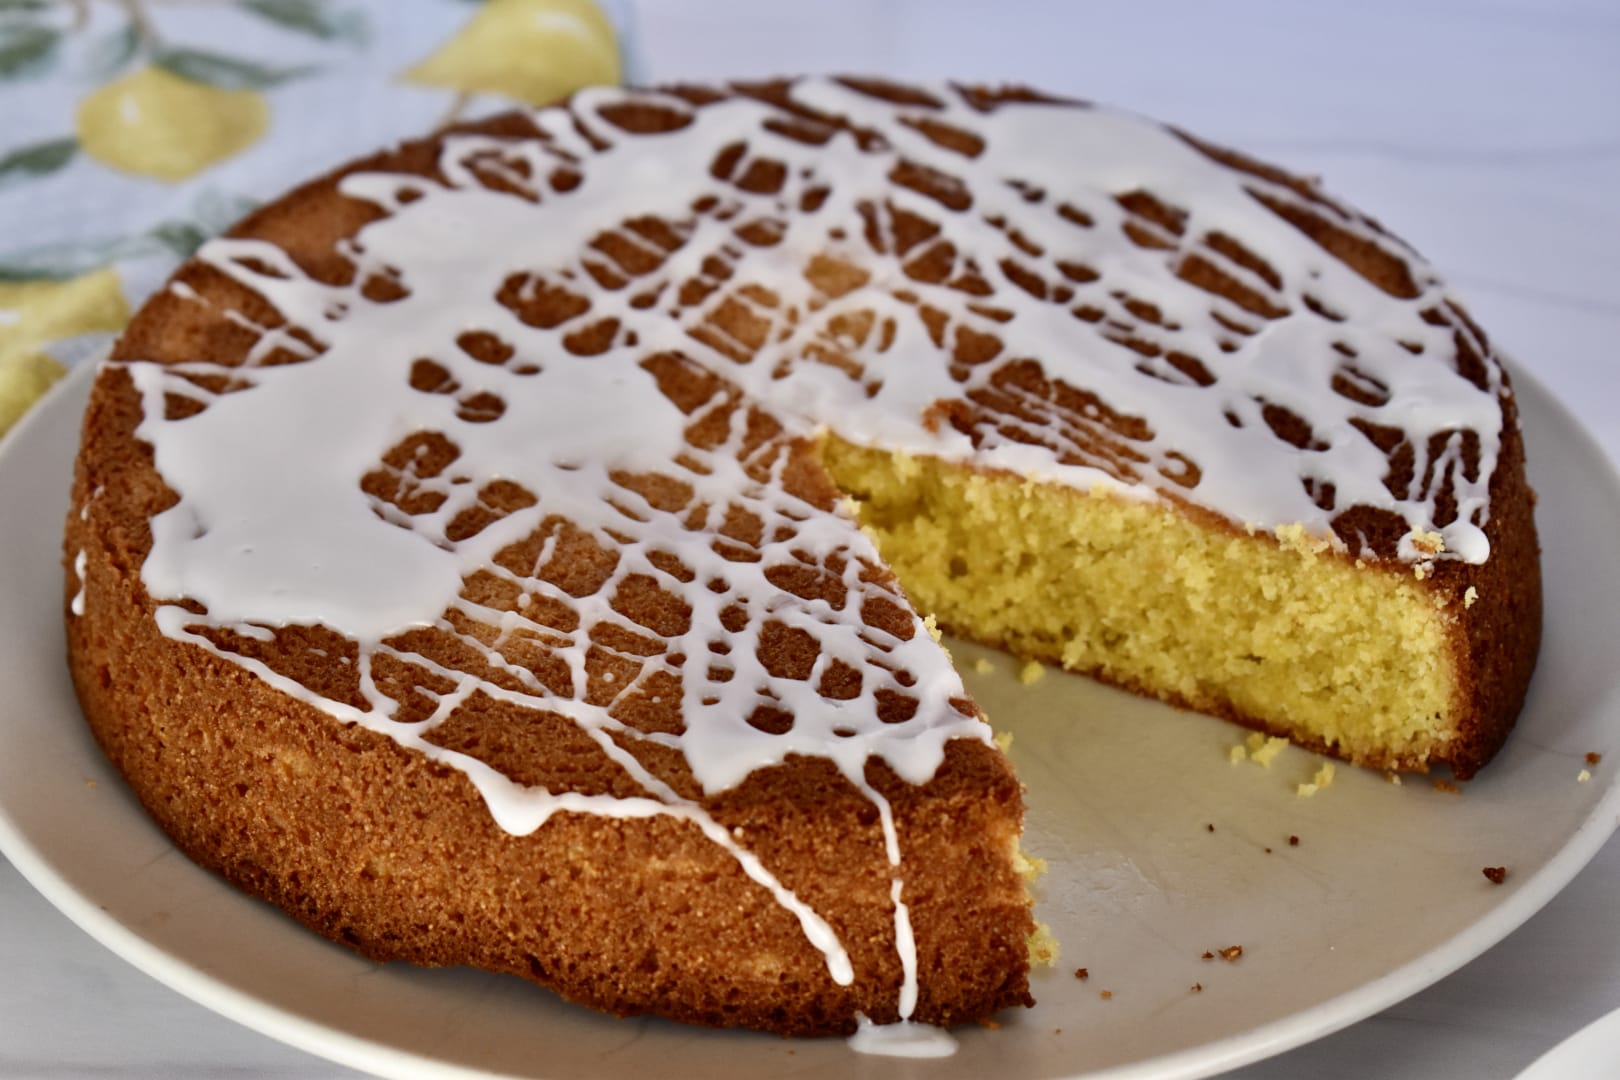 Lemon polenta cake vegan and gluten free Recipe, Calories & Nutrition Facts